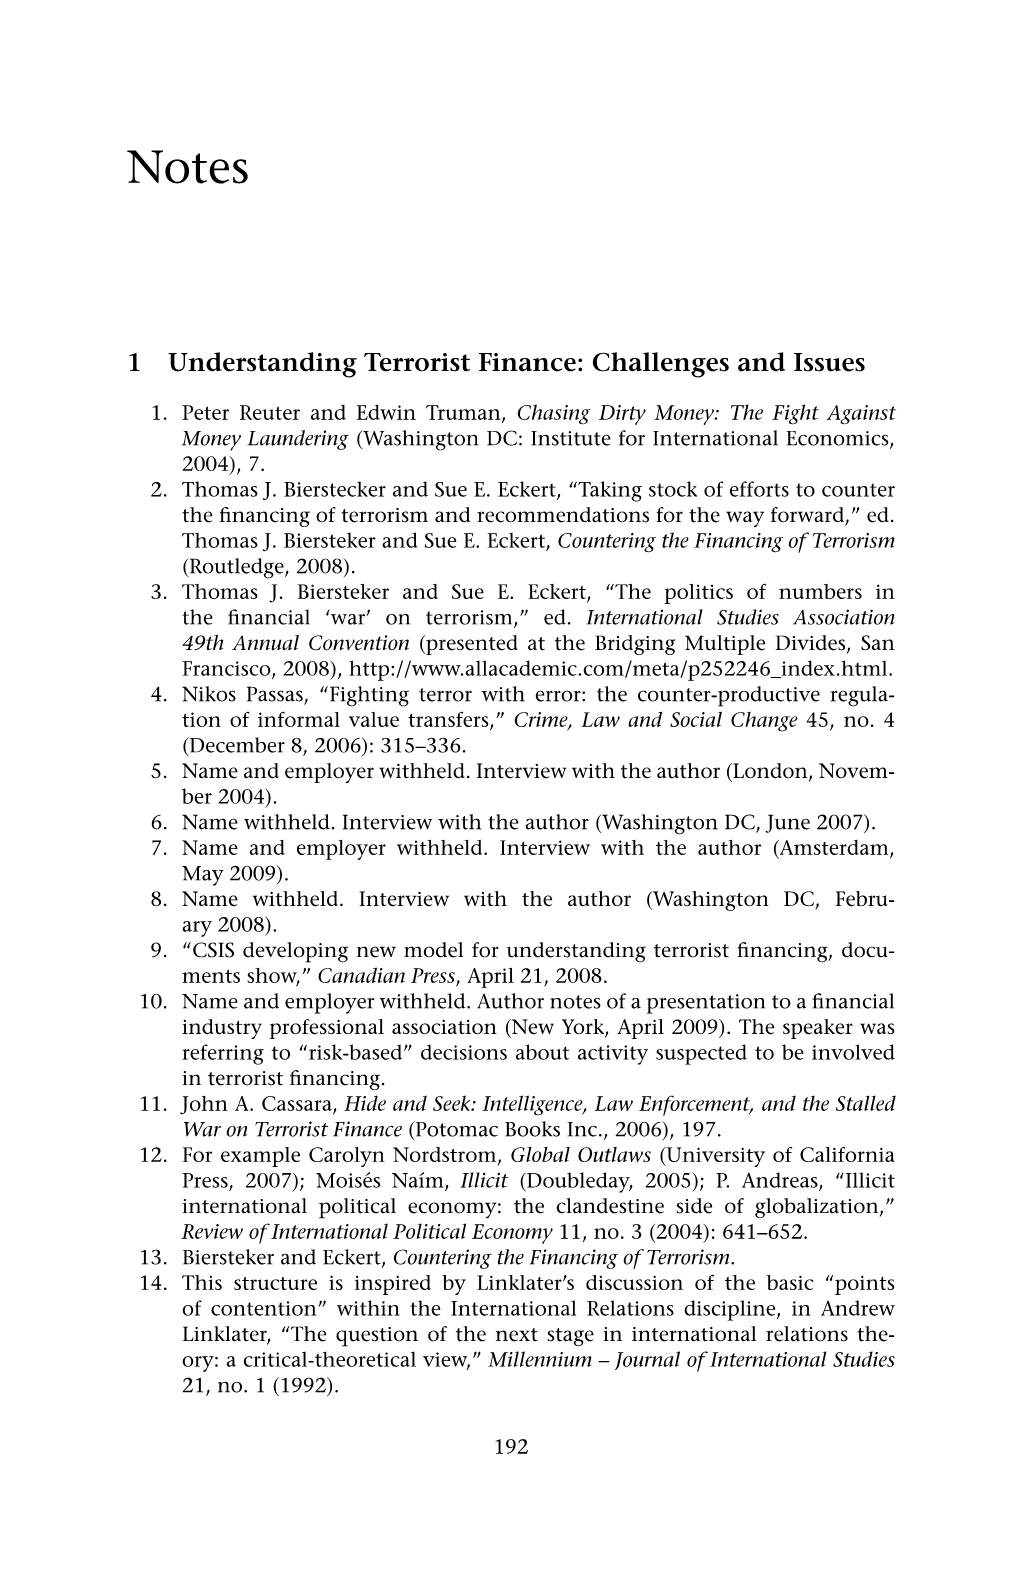 1 Understanding Terrorist Finance: Challenges and Issues